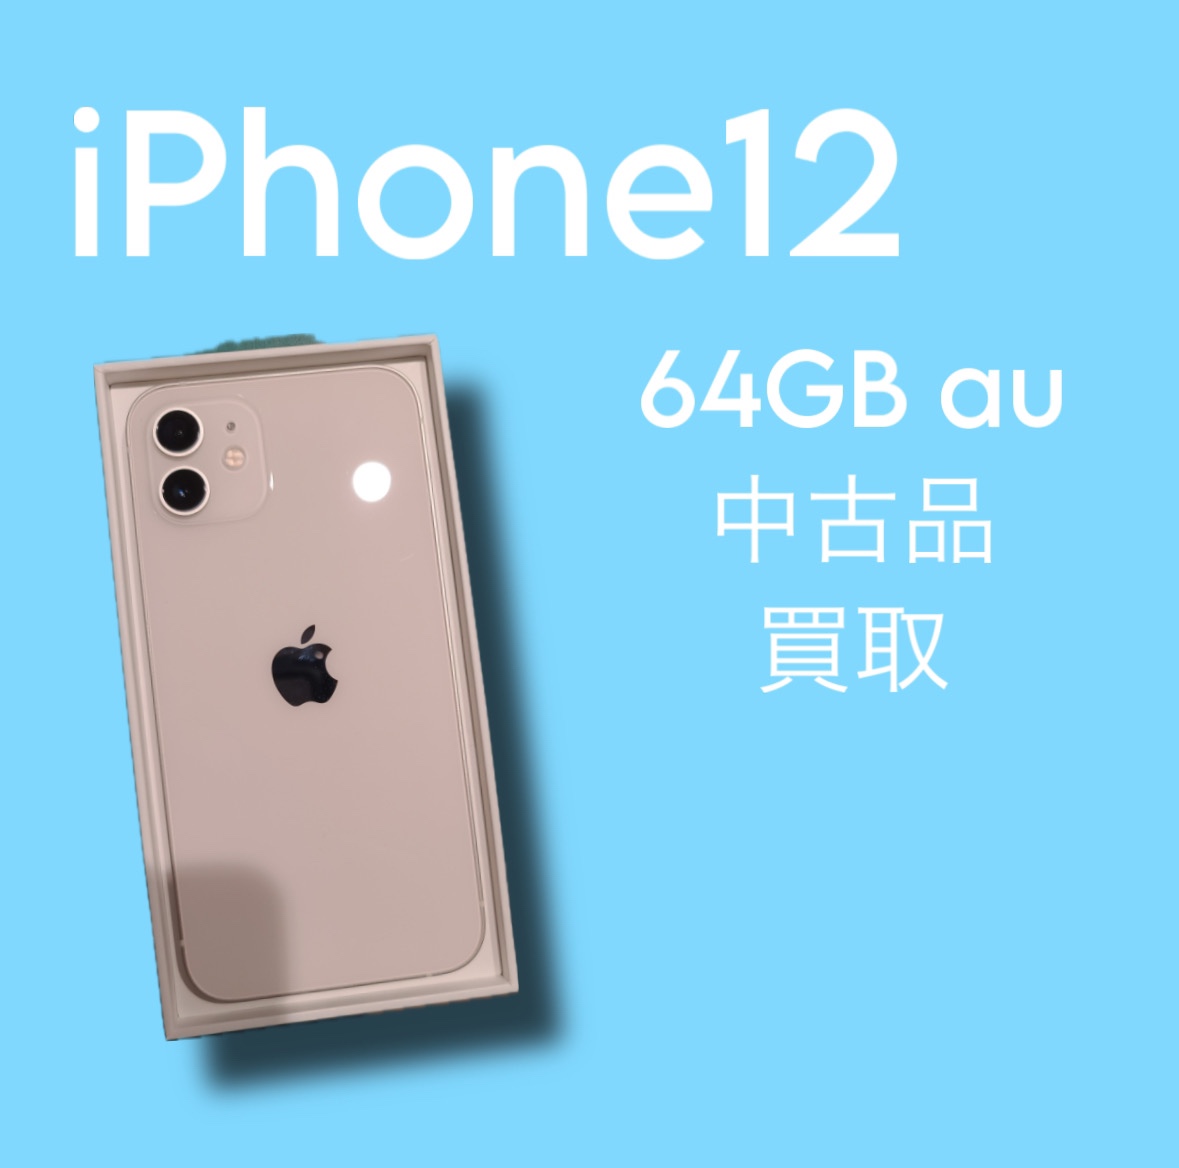 iPhone12・64GB・au・ネット制限〇【天神地下街店】